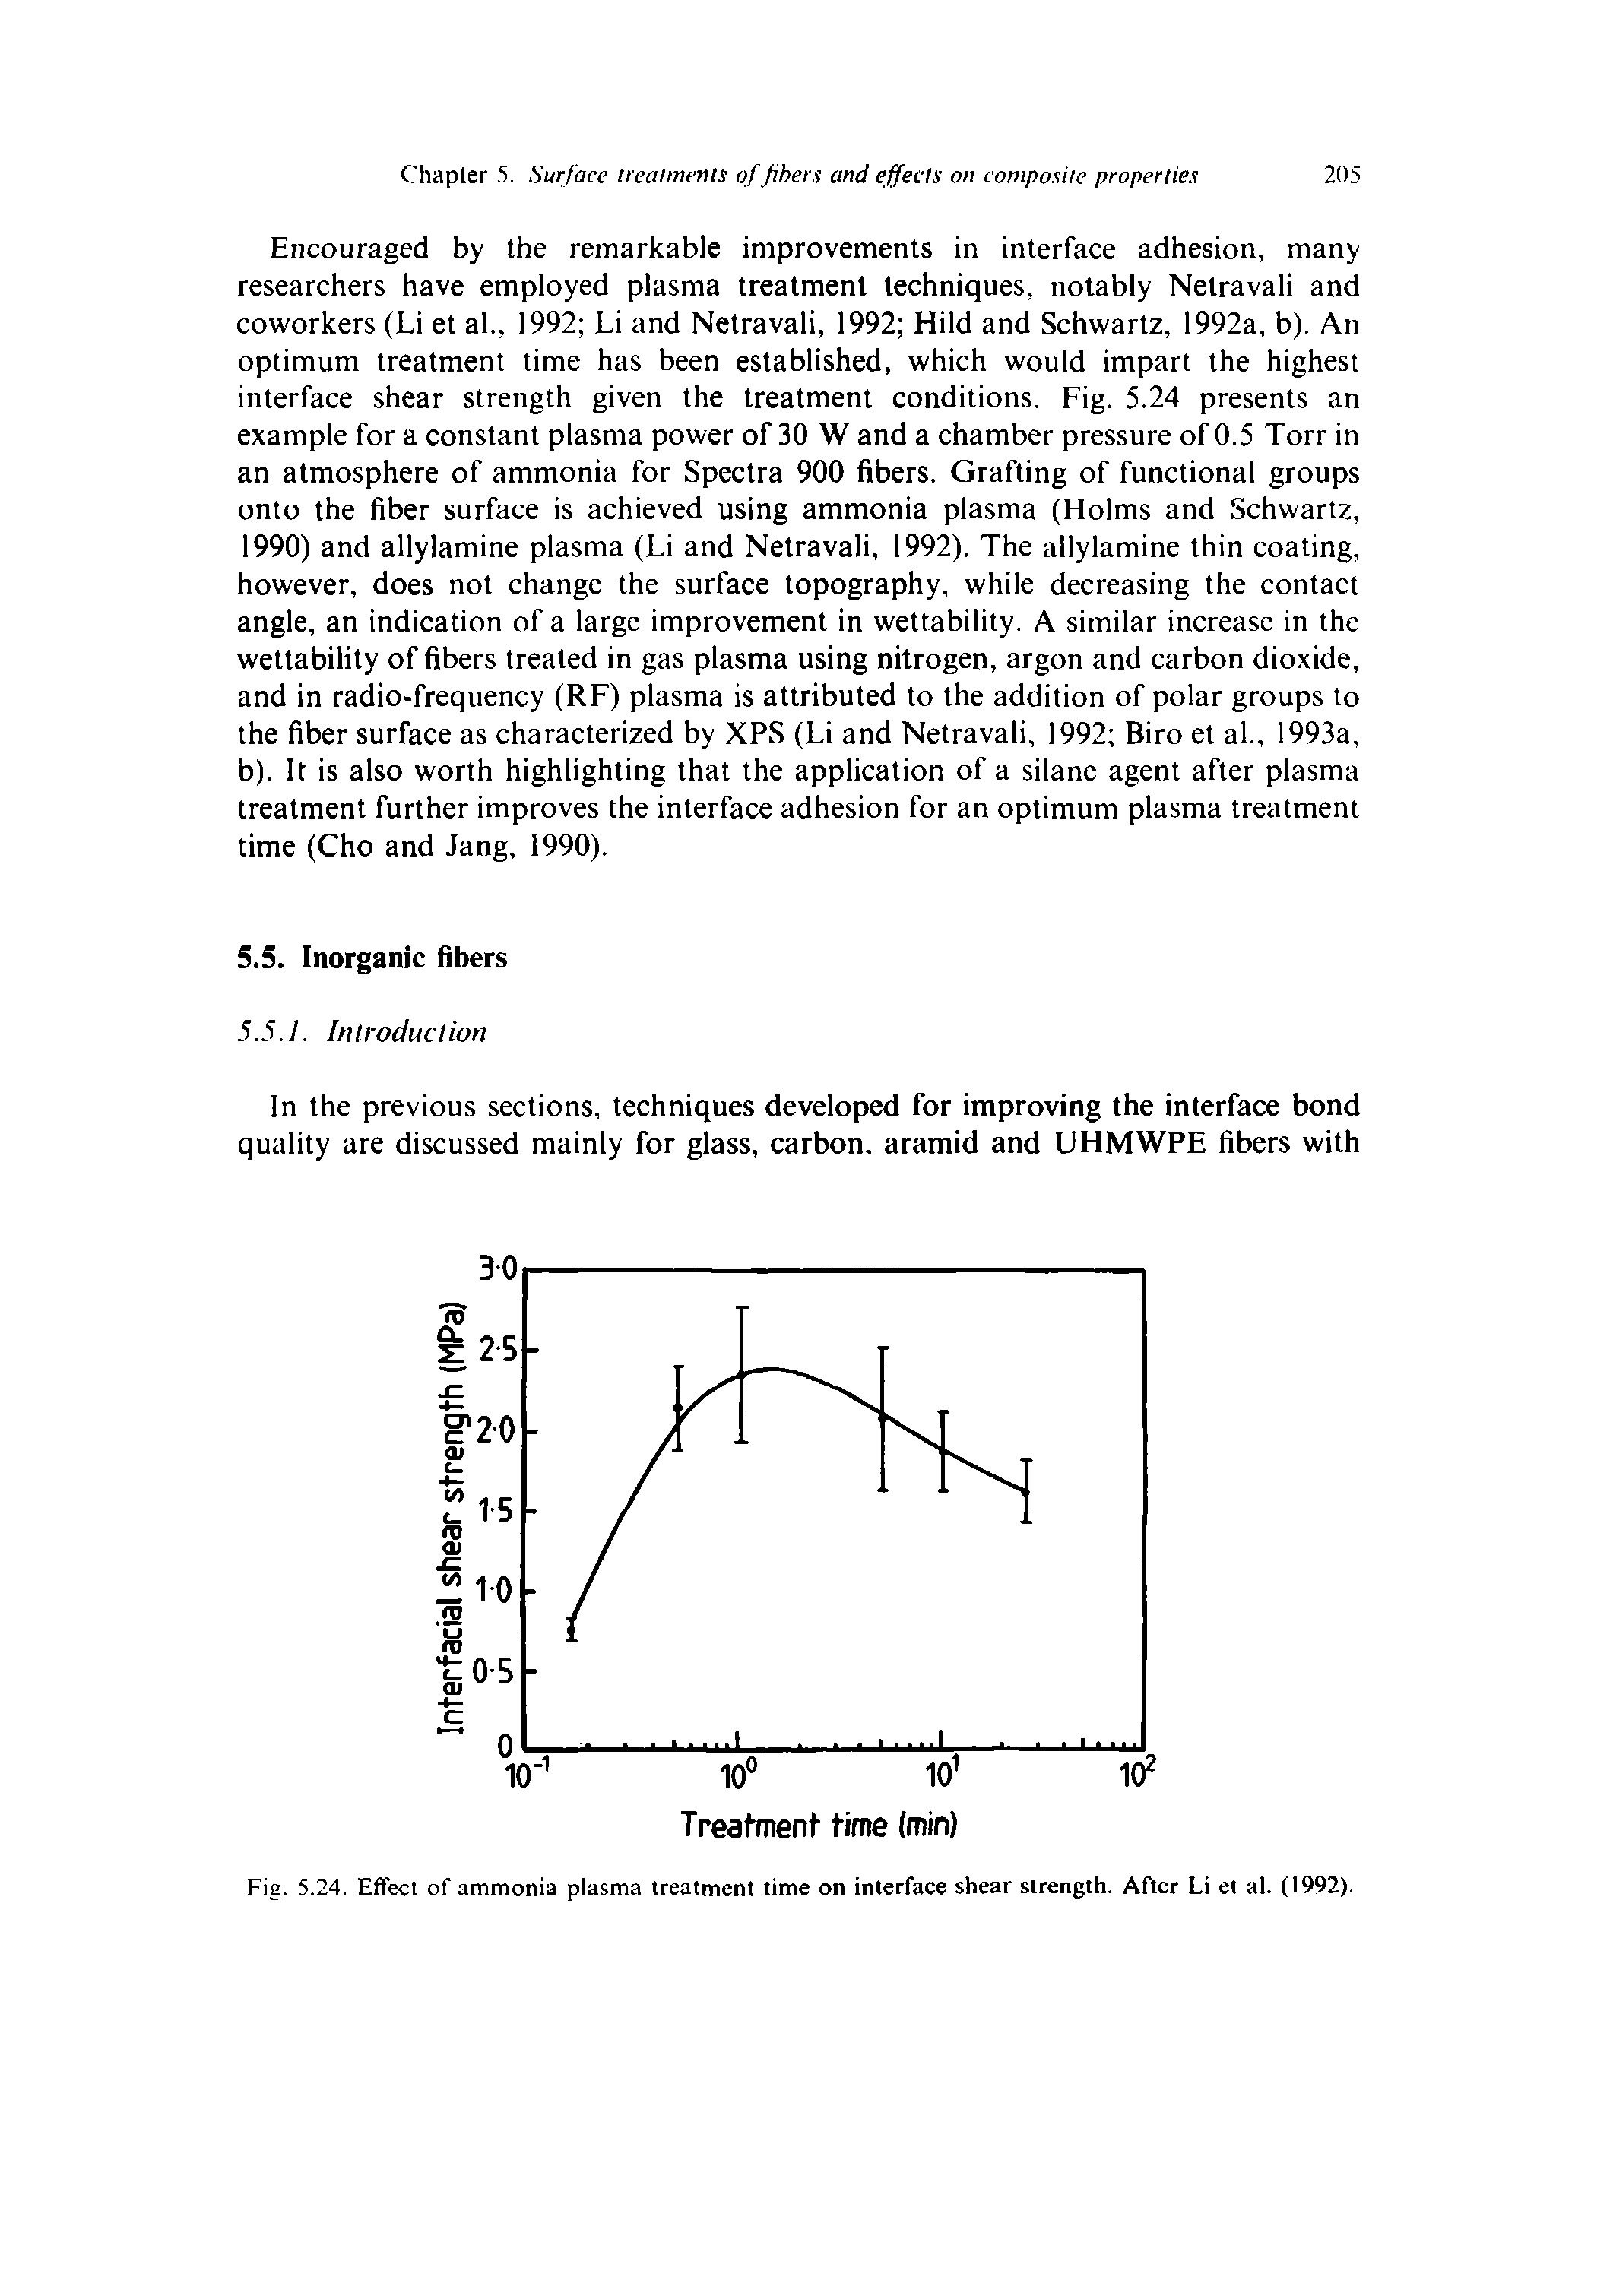 Fig. 5.24. Effect of ammonia plasma treatment lime on interface shear strength. After Li et al. (1992).